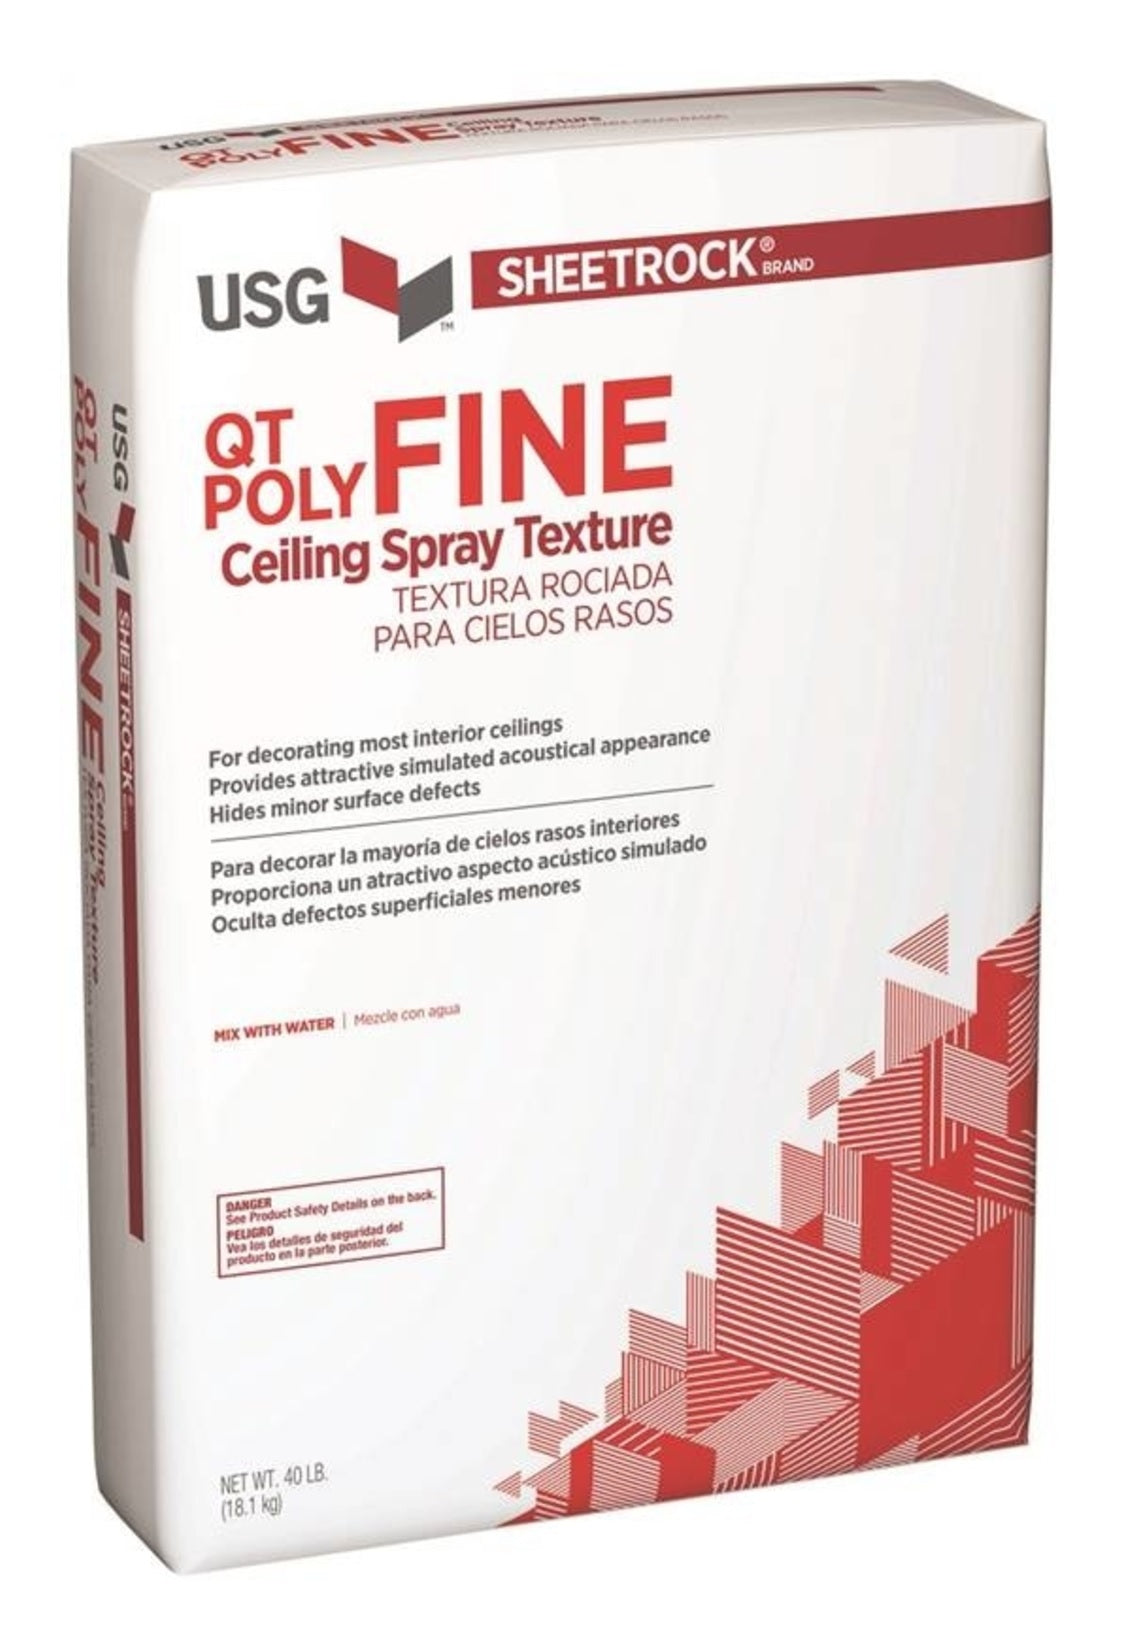 Sheetrock 540500 Ceiling Spray Texture, Qt Poly Fine, 40 Lb Bag